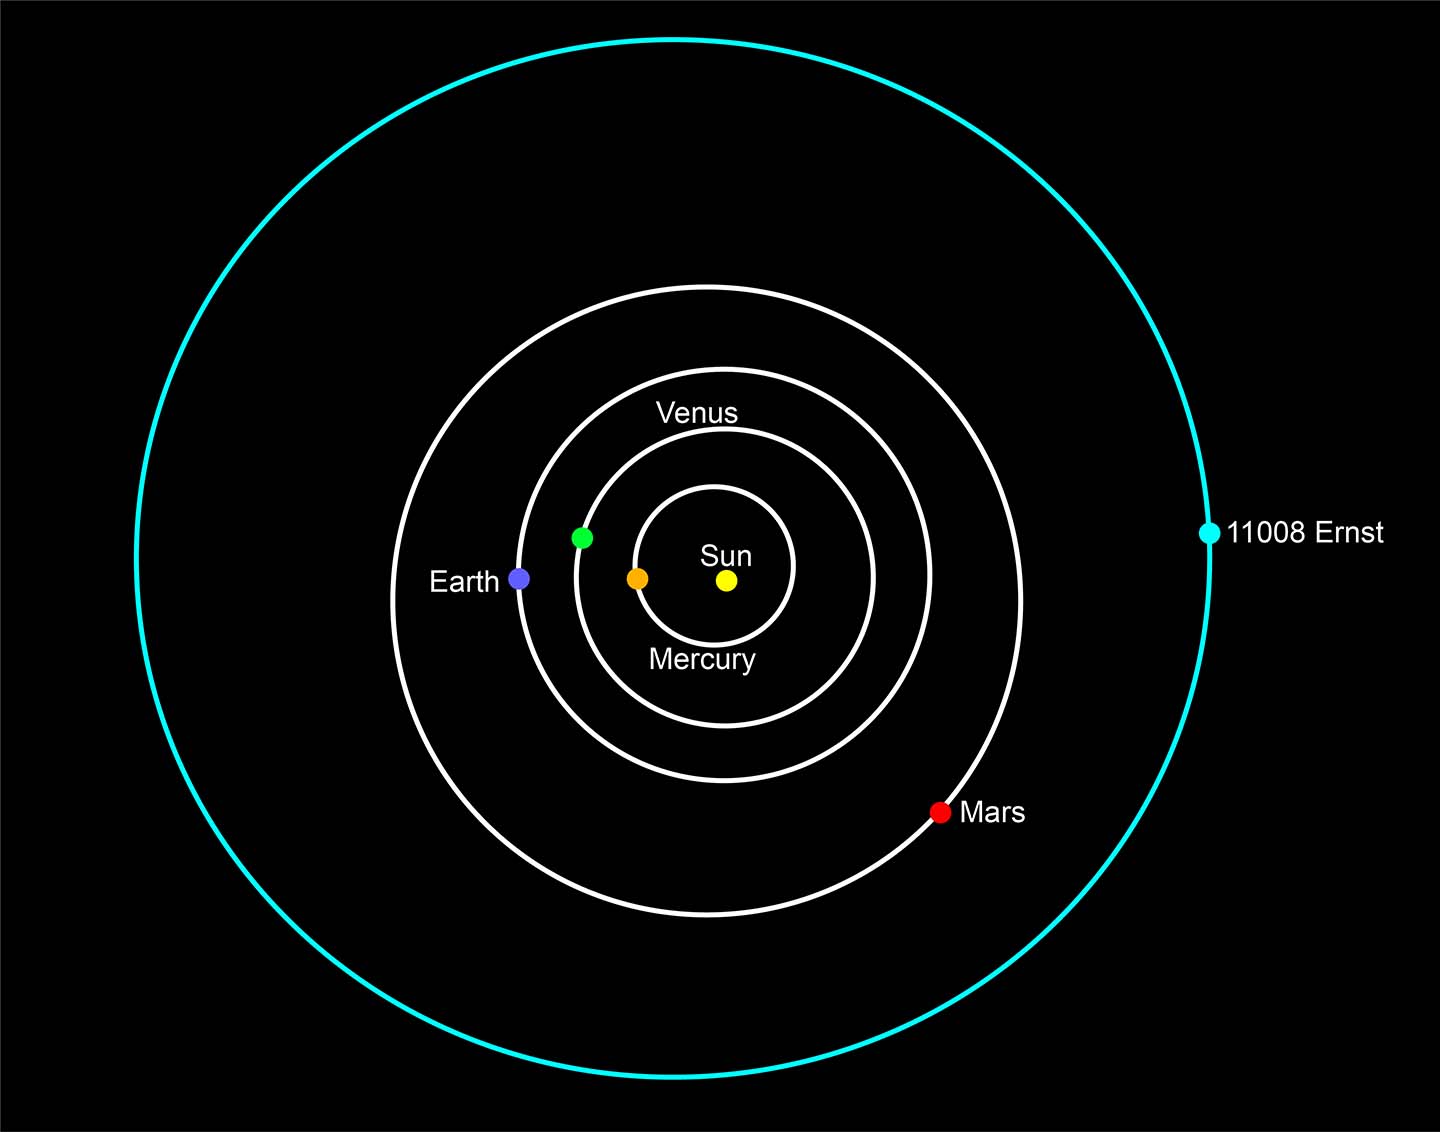 The orbit of asteroid 11008 Ernst